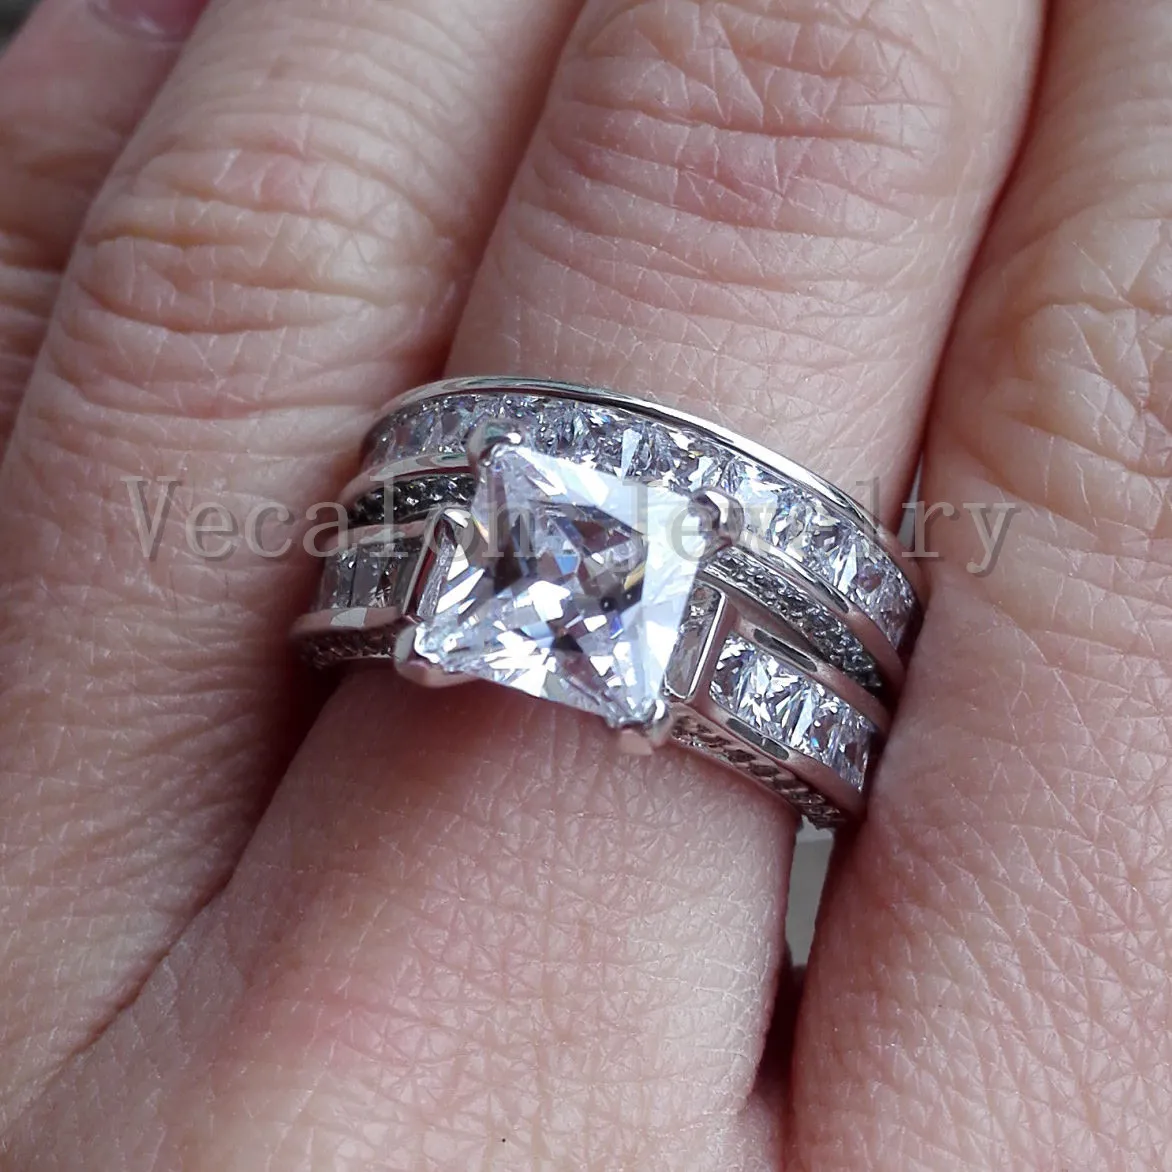 Vecalon ファッションジュエリー 7 ミリメートル Cz ダイヤモンド婚約結婚指輪リングセット女性のための 14KT ホワイトゴールド充填パーティーリング